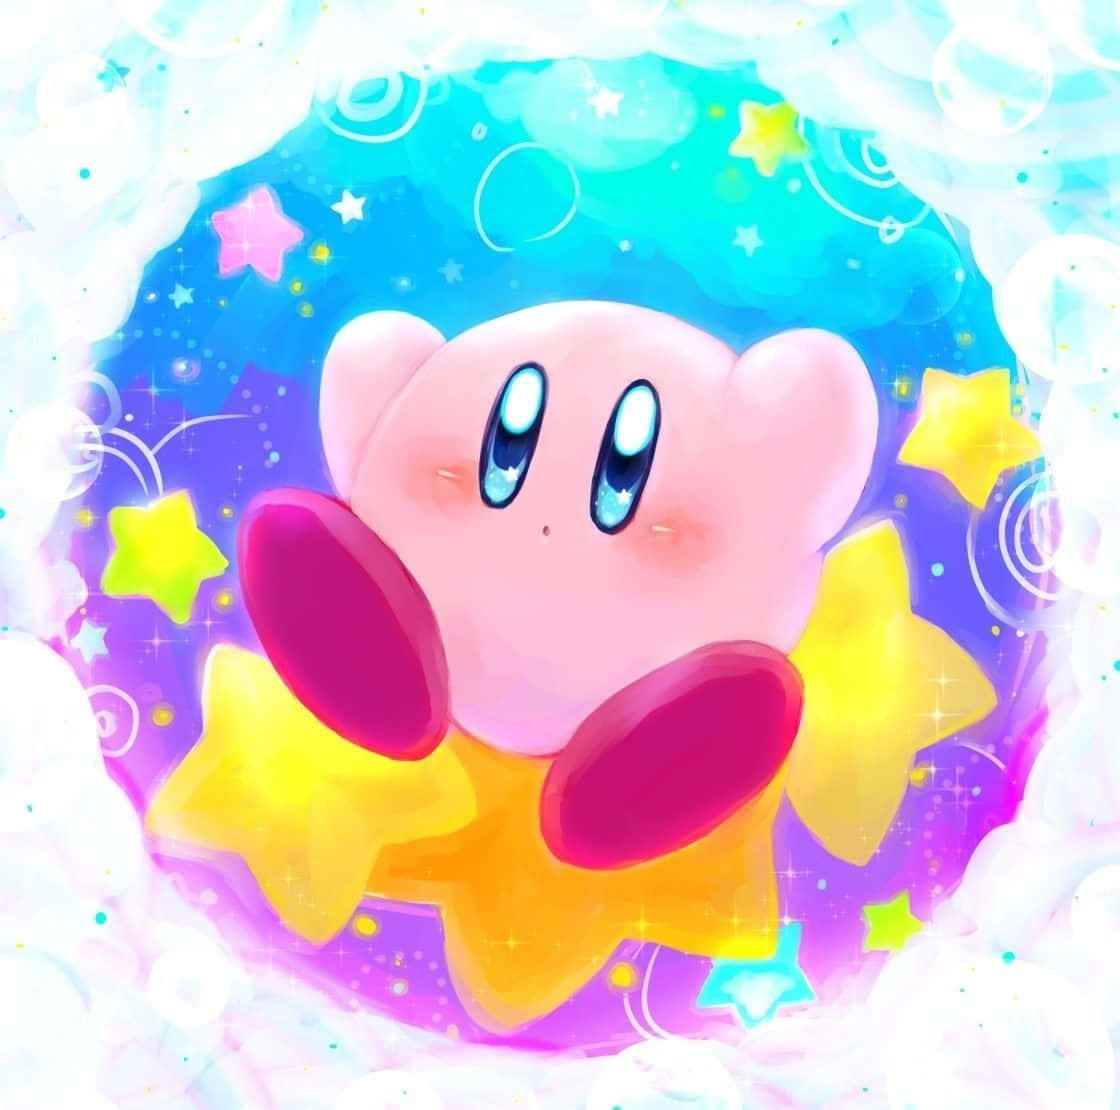 "Smiling Kirby enjoying a Snowy Day"